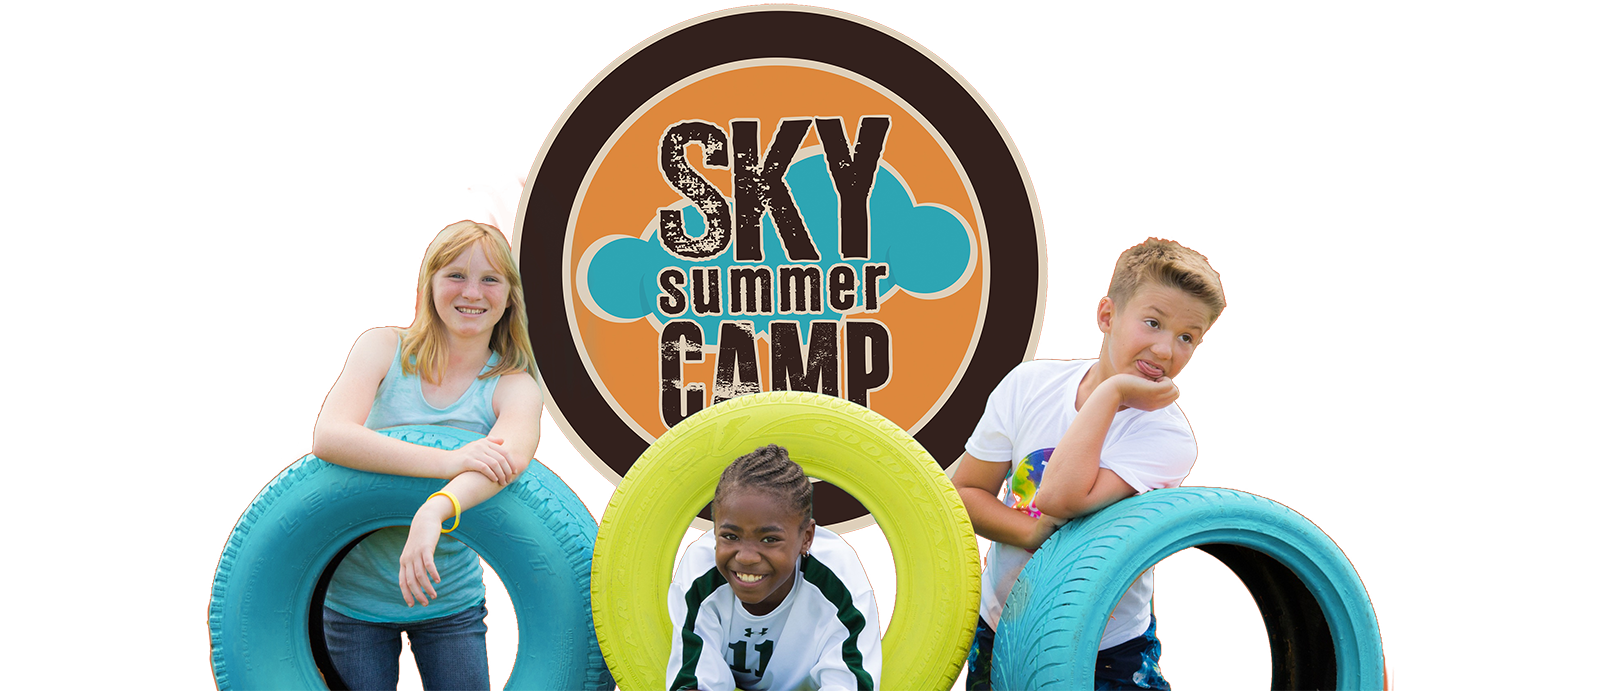 SKY Summer Camp